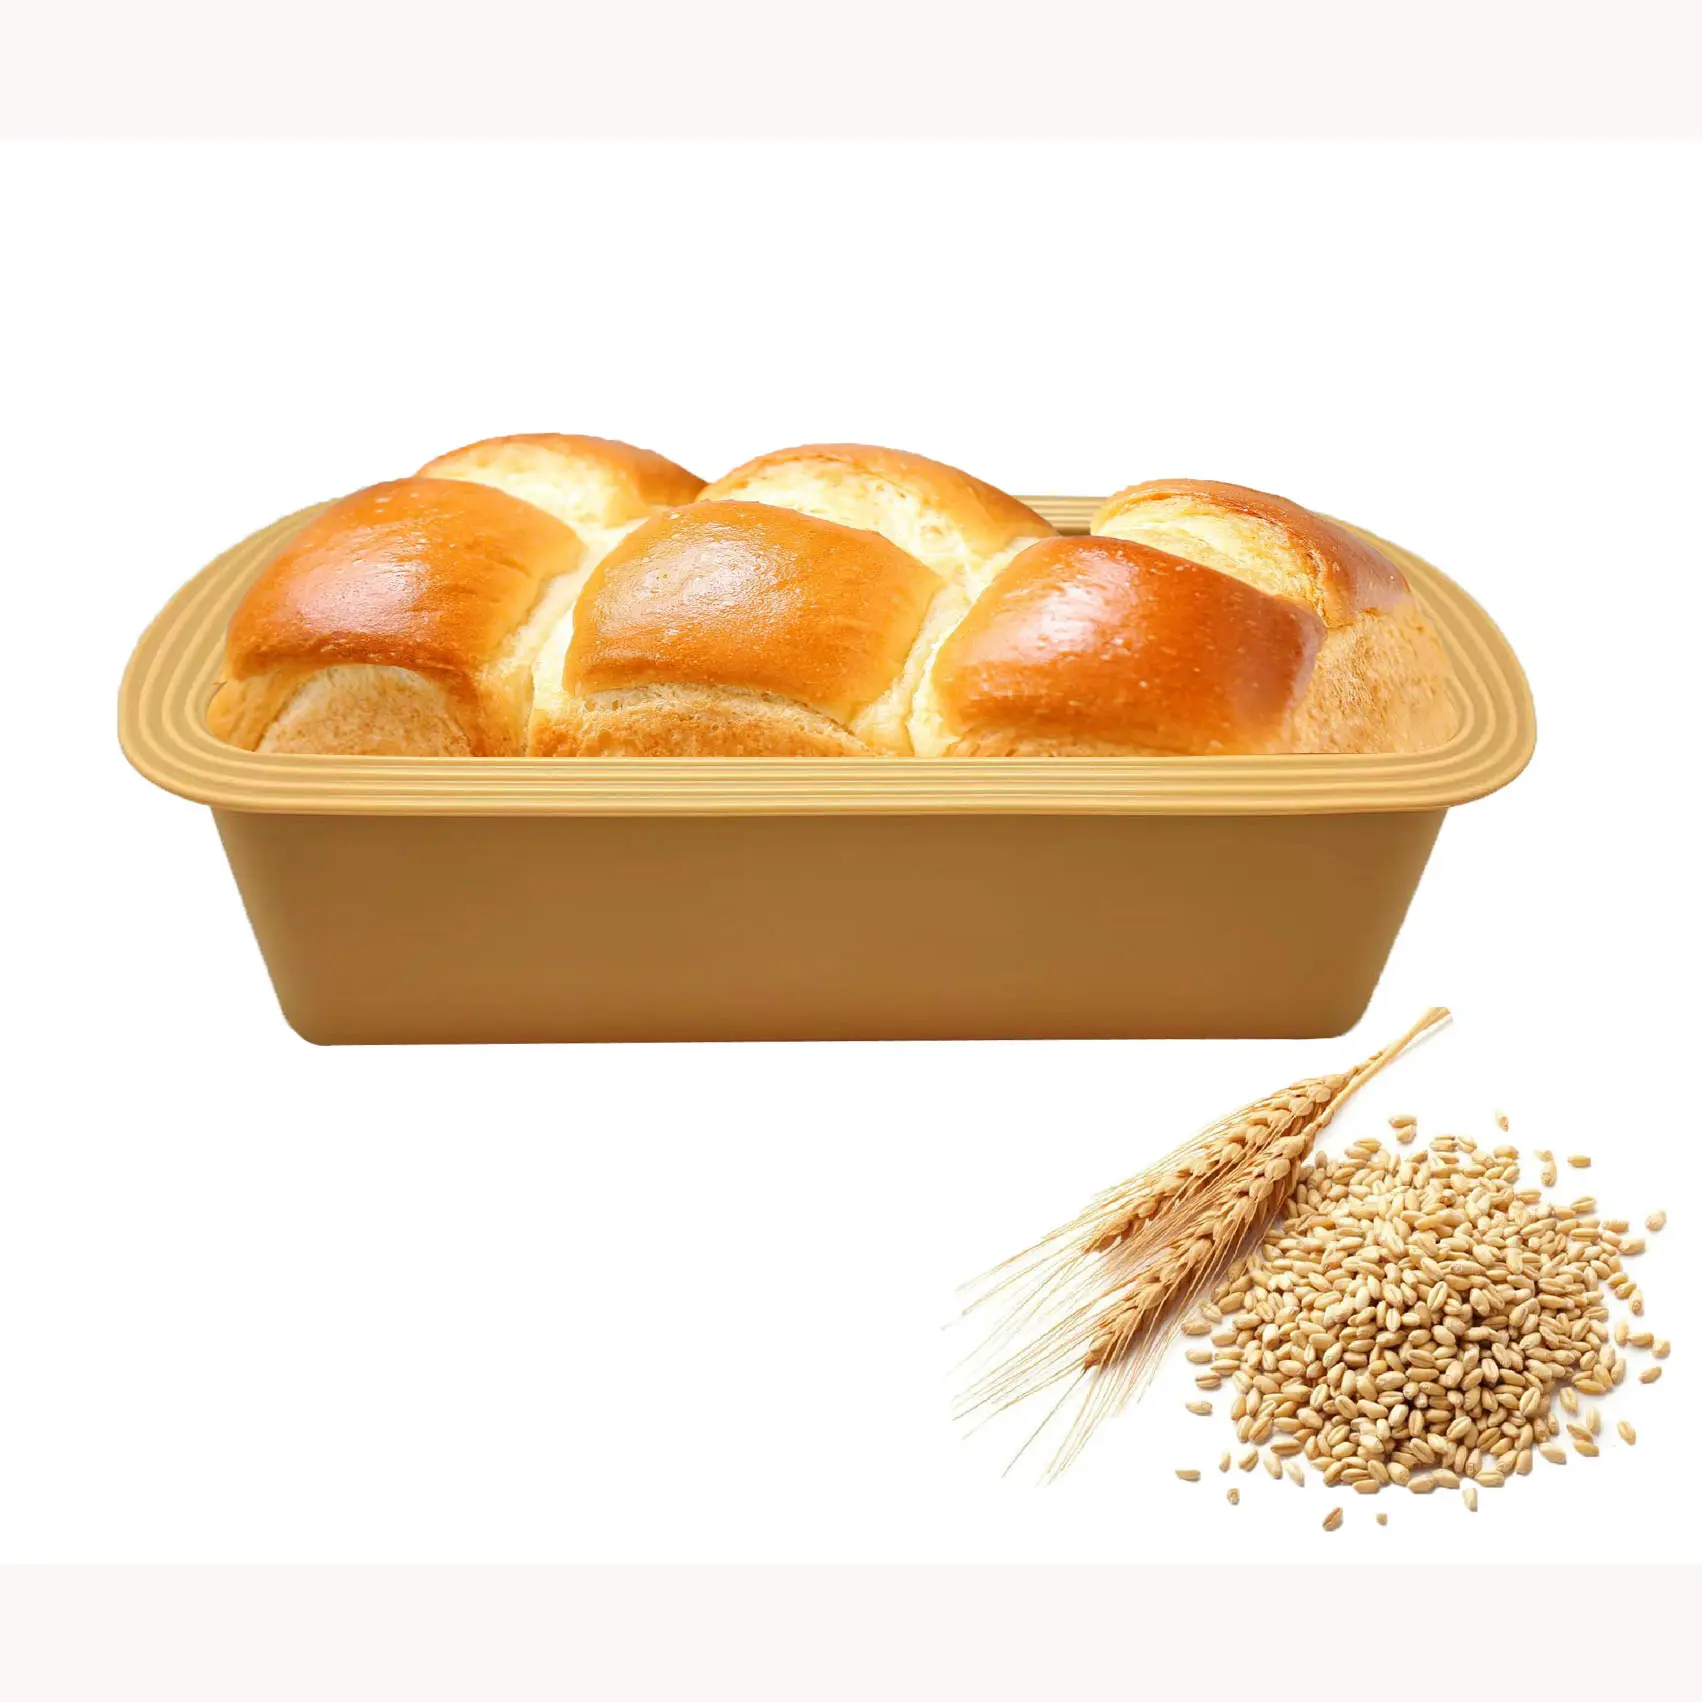 Food Grade Siliconen Bakken Cakevorm Non-stick Brood En Toast Mold Rechthoek Siliconen Broodvorm